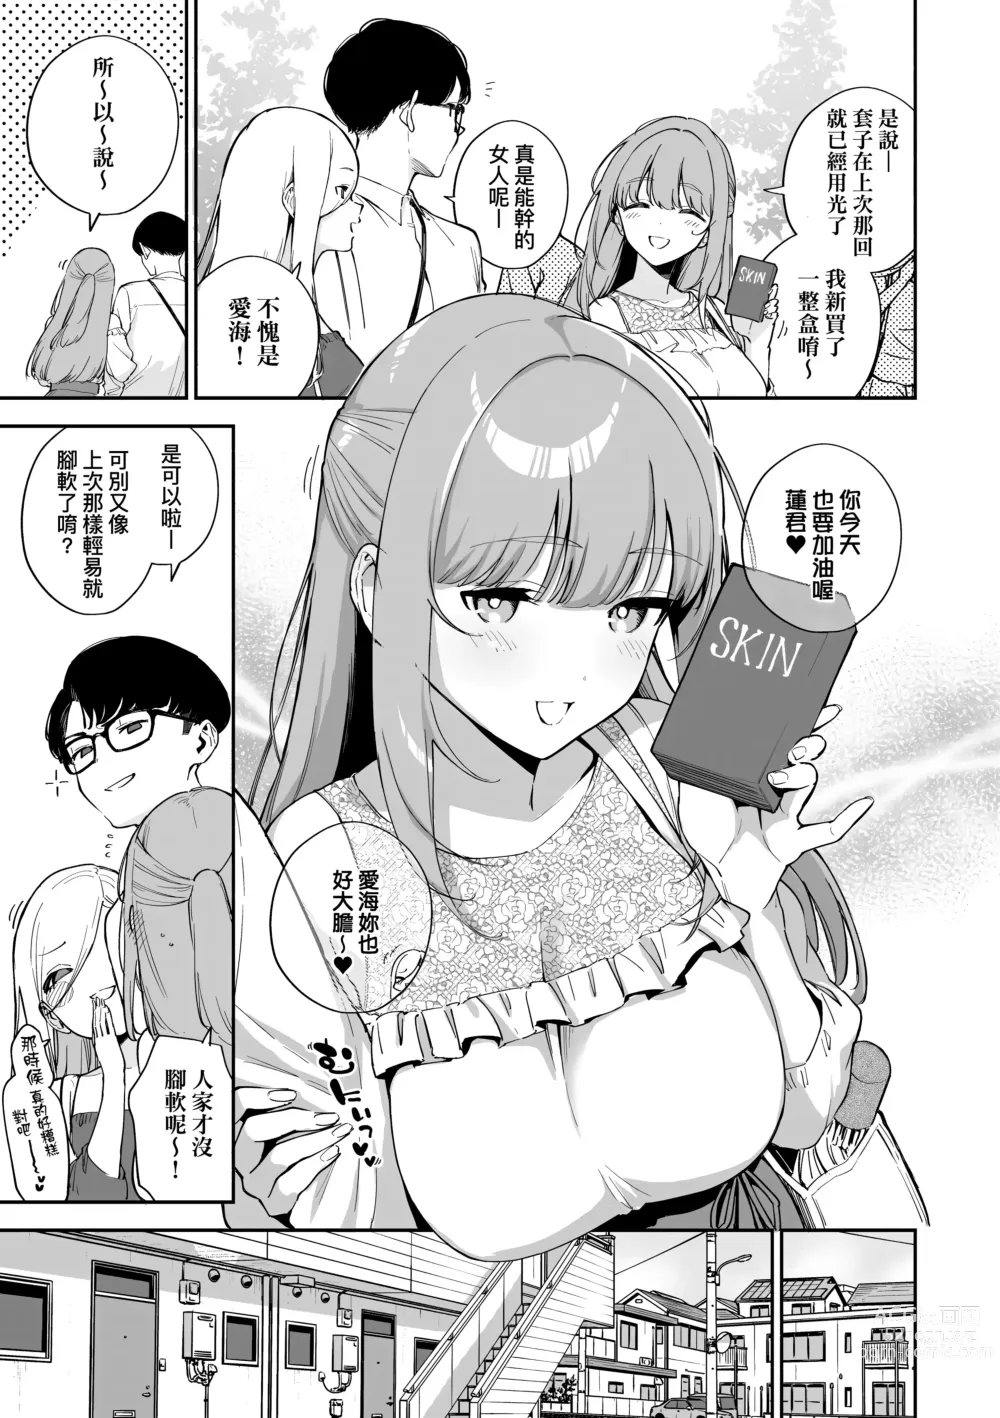 Page 9 of manga 苦澀・甘甜・錯綜複雜的滋味 (decensored)